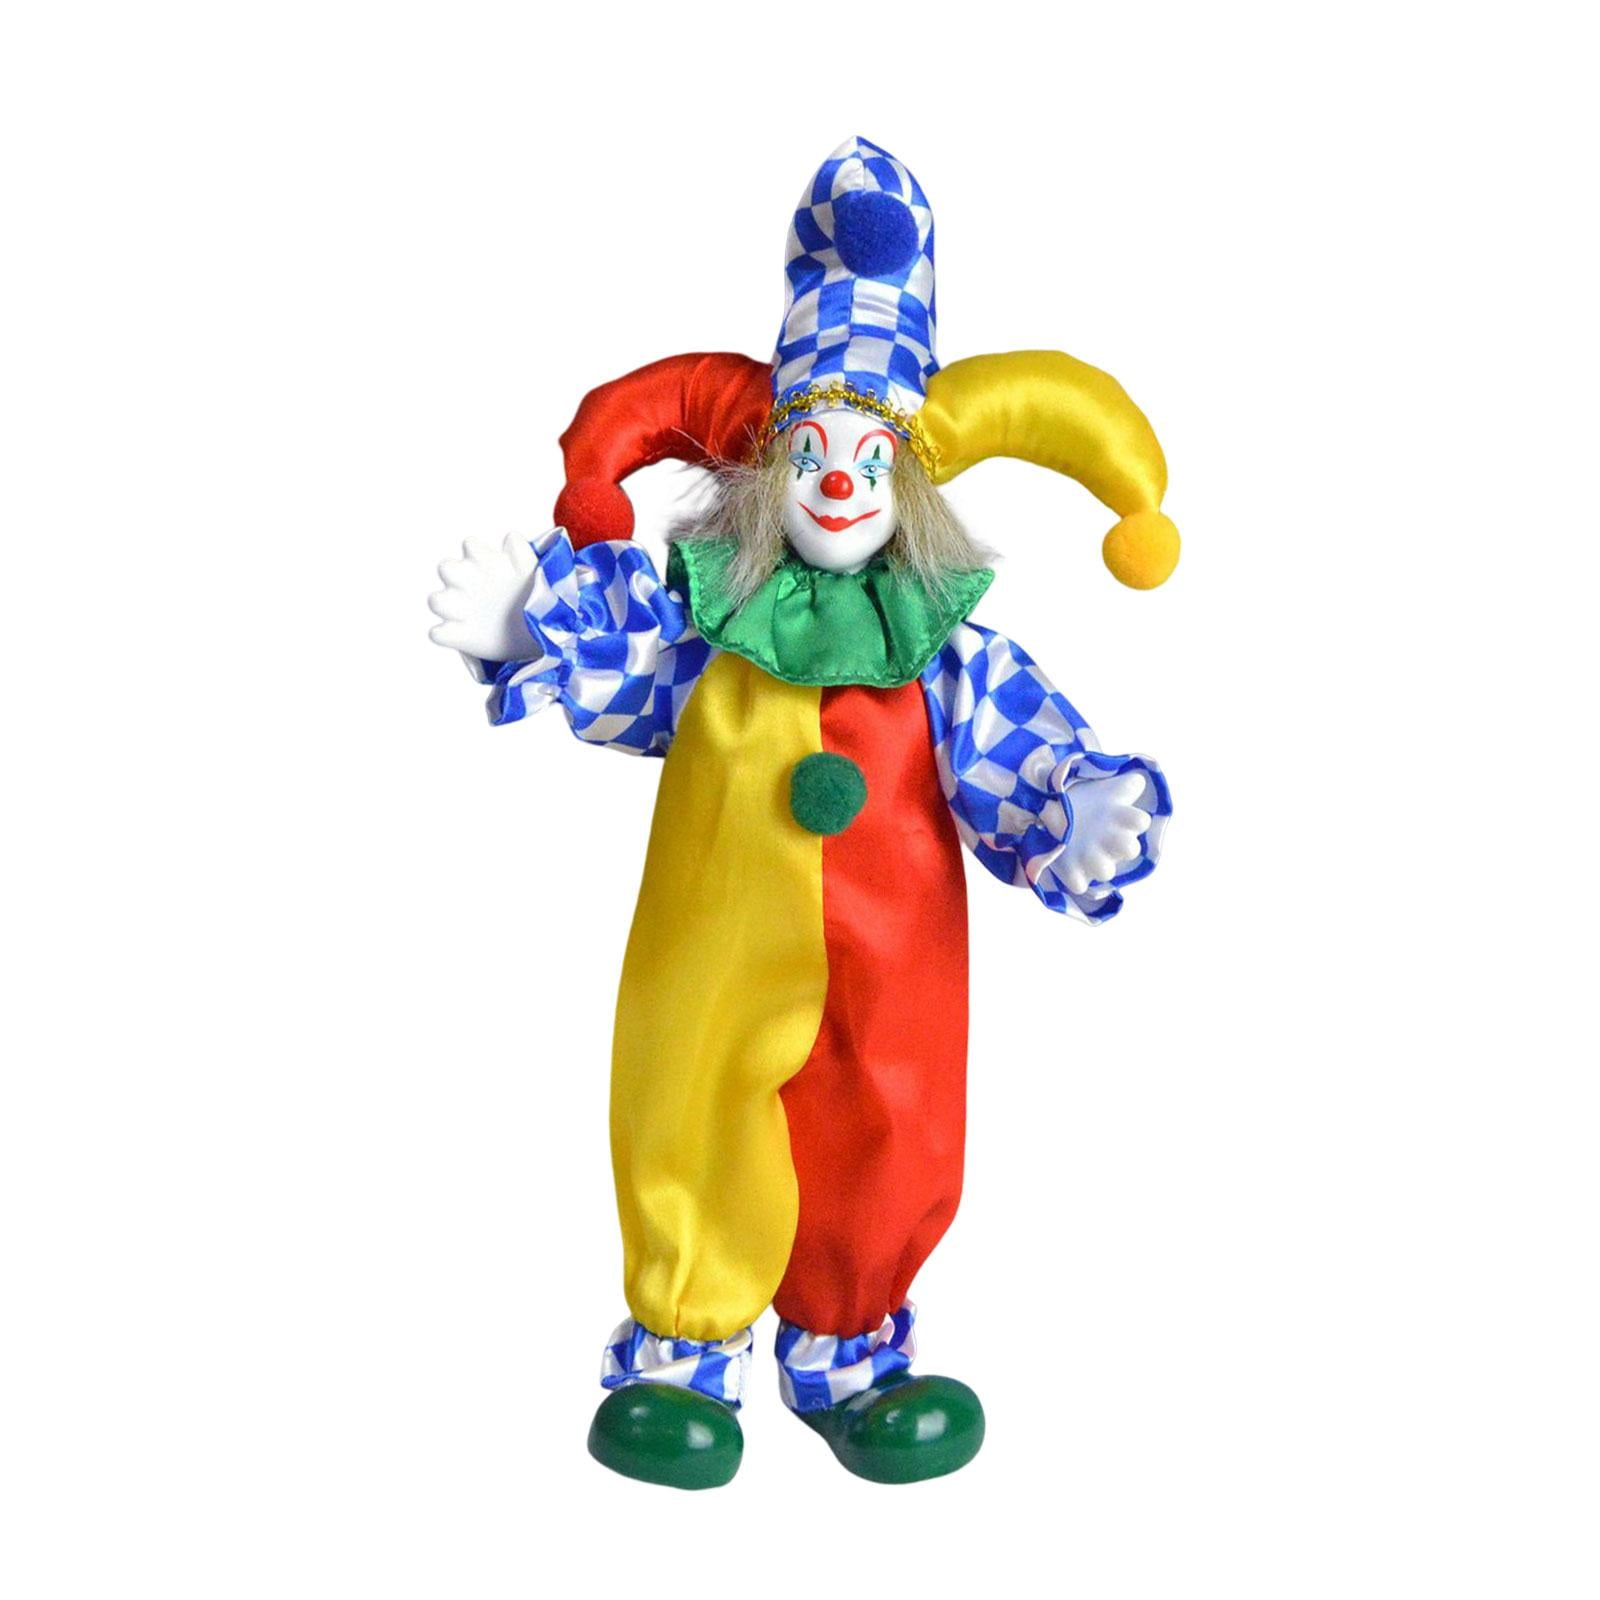 P 'tit Clown Re36388 cotillons, Multi-coloured, Pack 10 persons